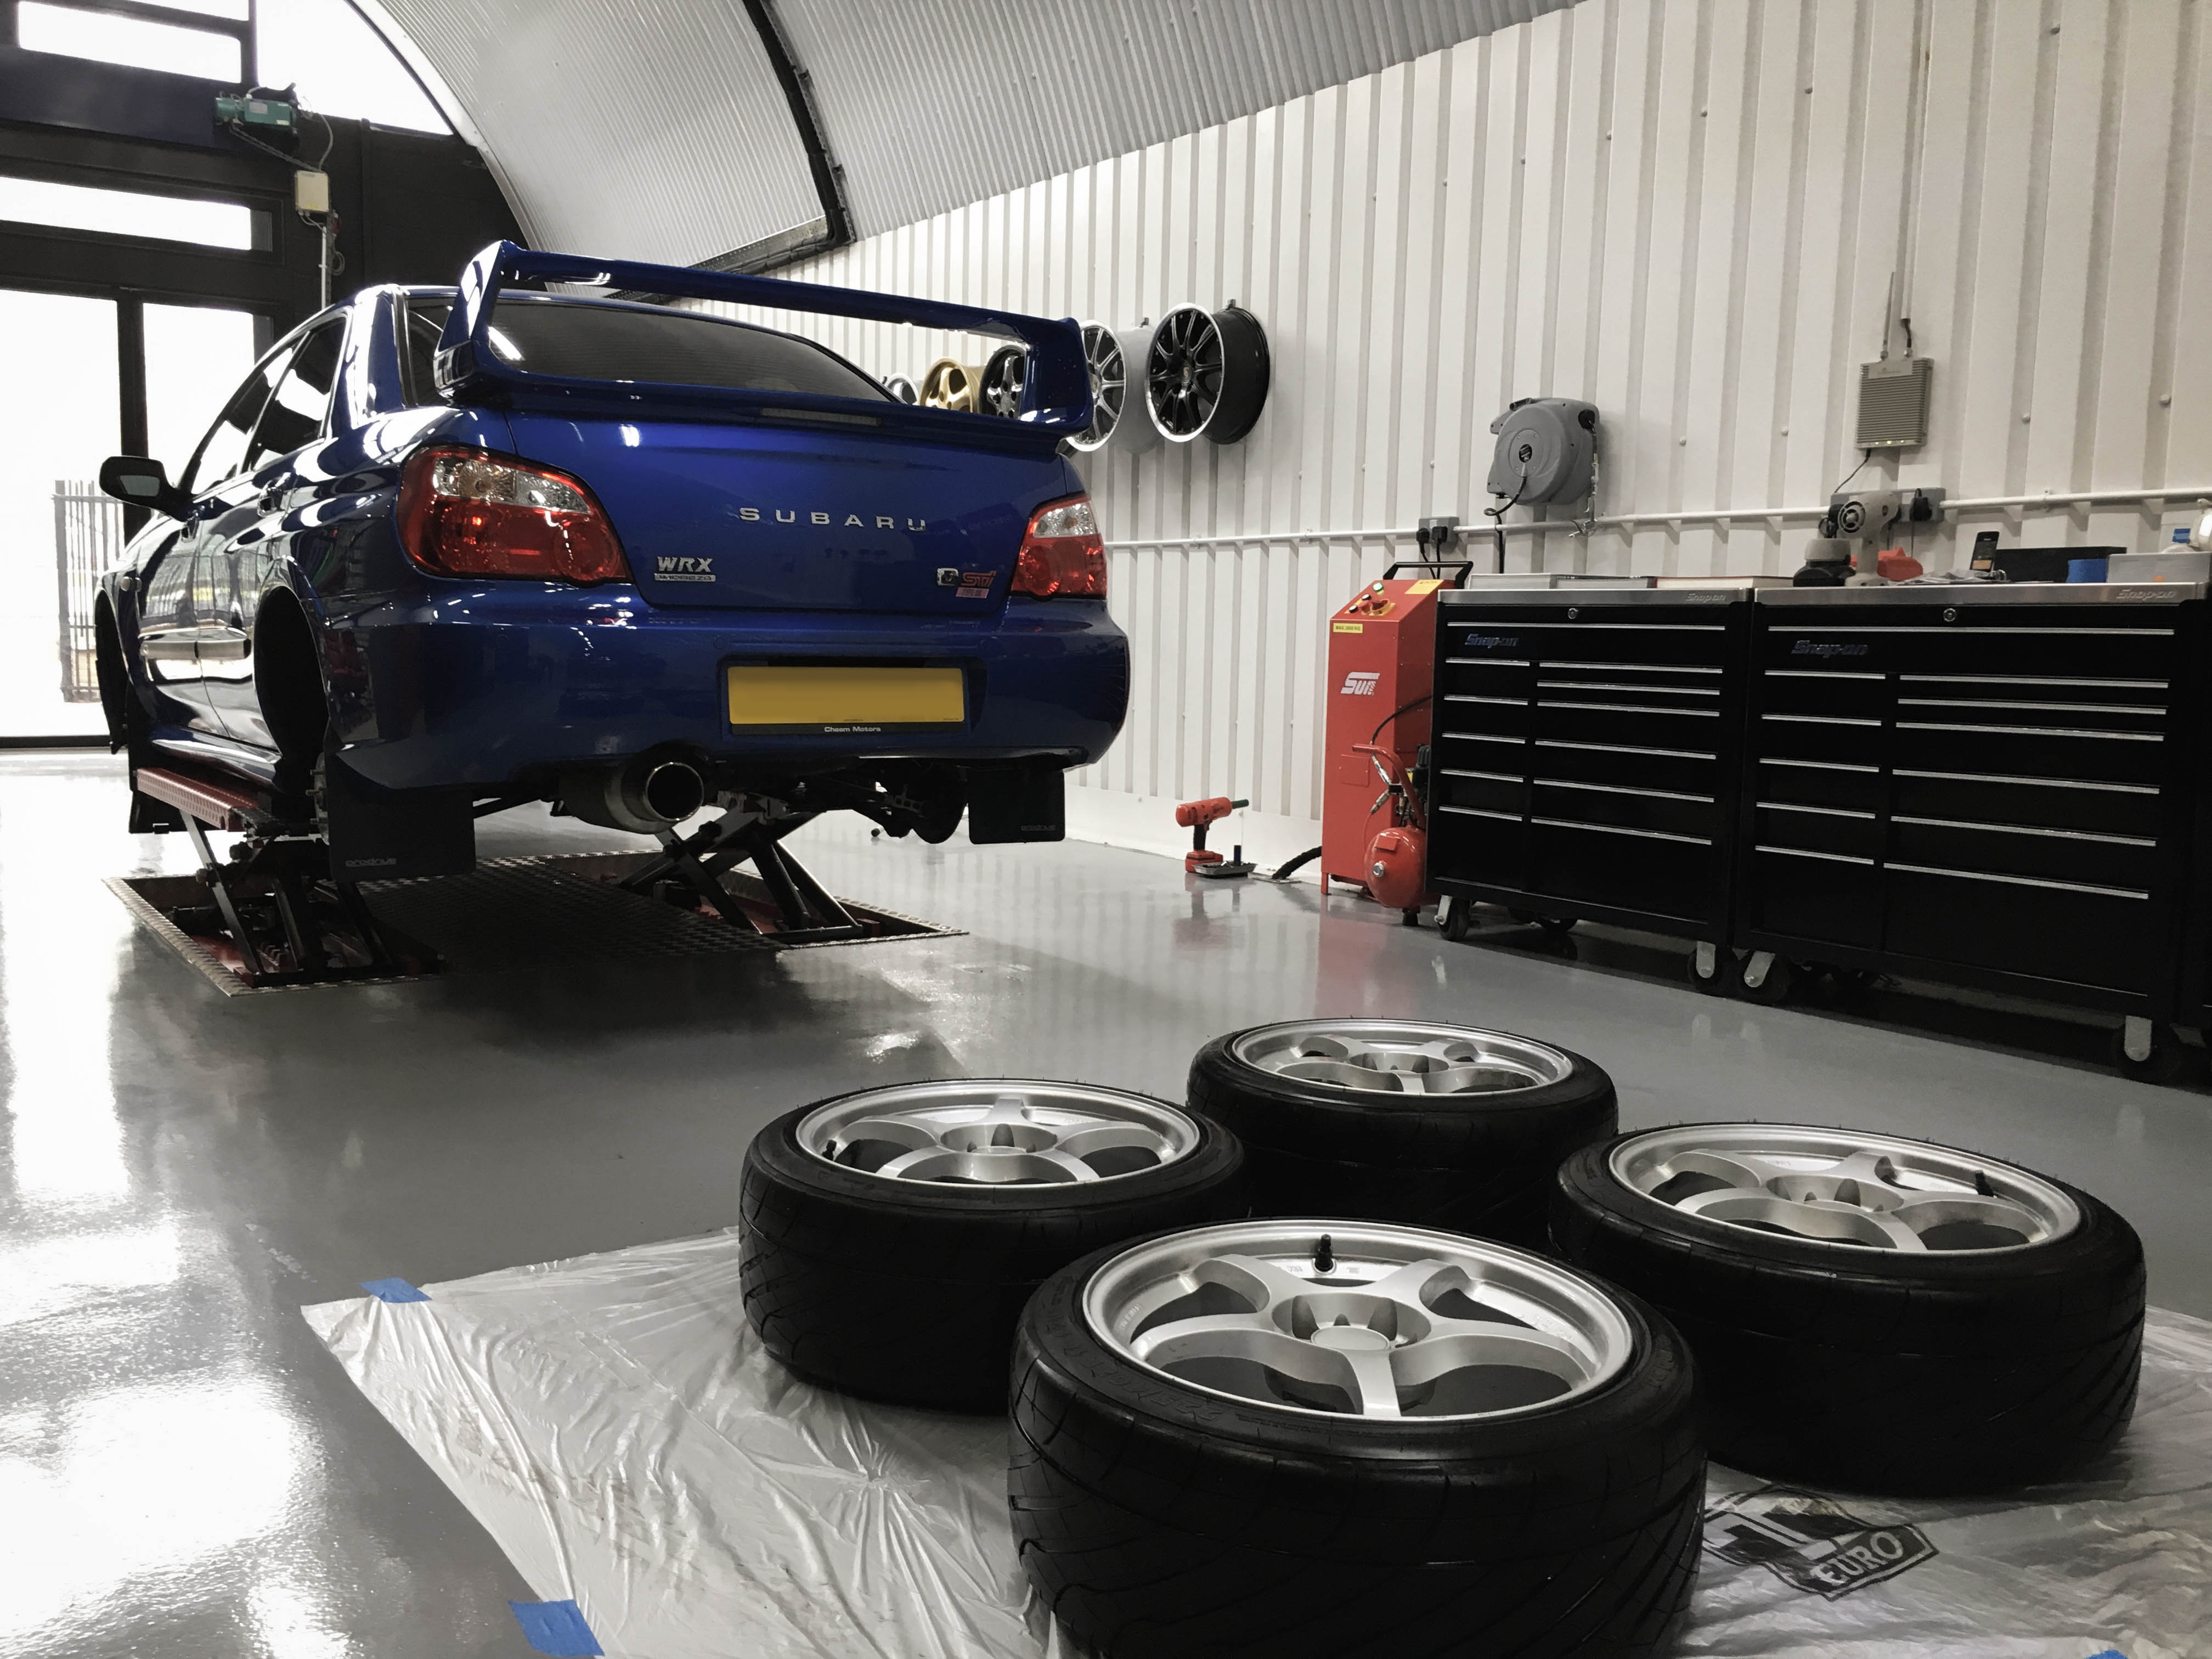 Subaru-Impreza-WRX-rear-wheels-off